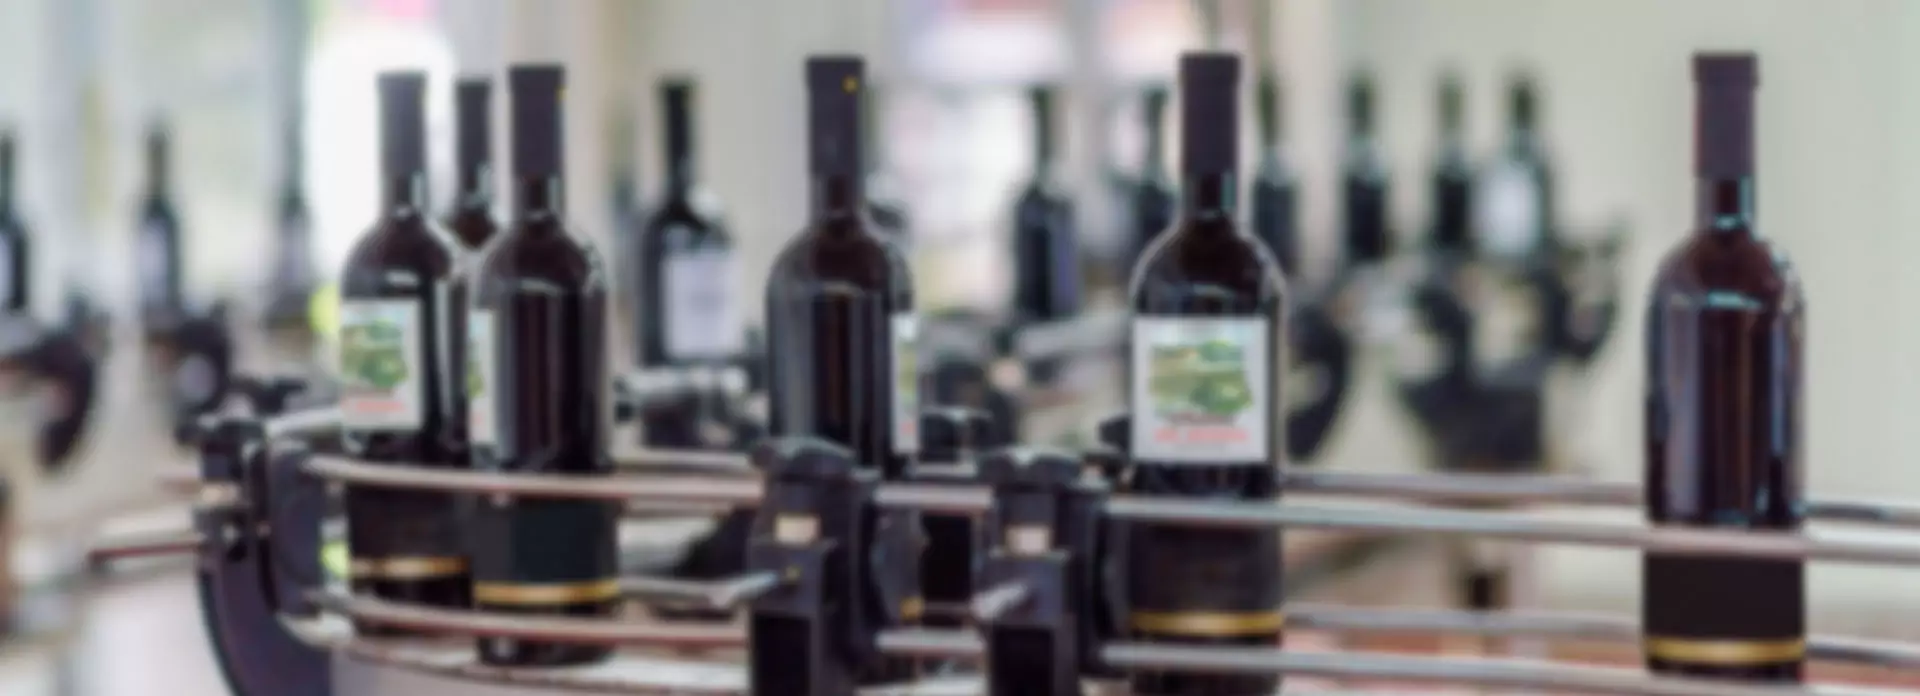 Wine bottle labels color label printers from Afinia Label